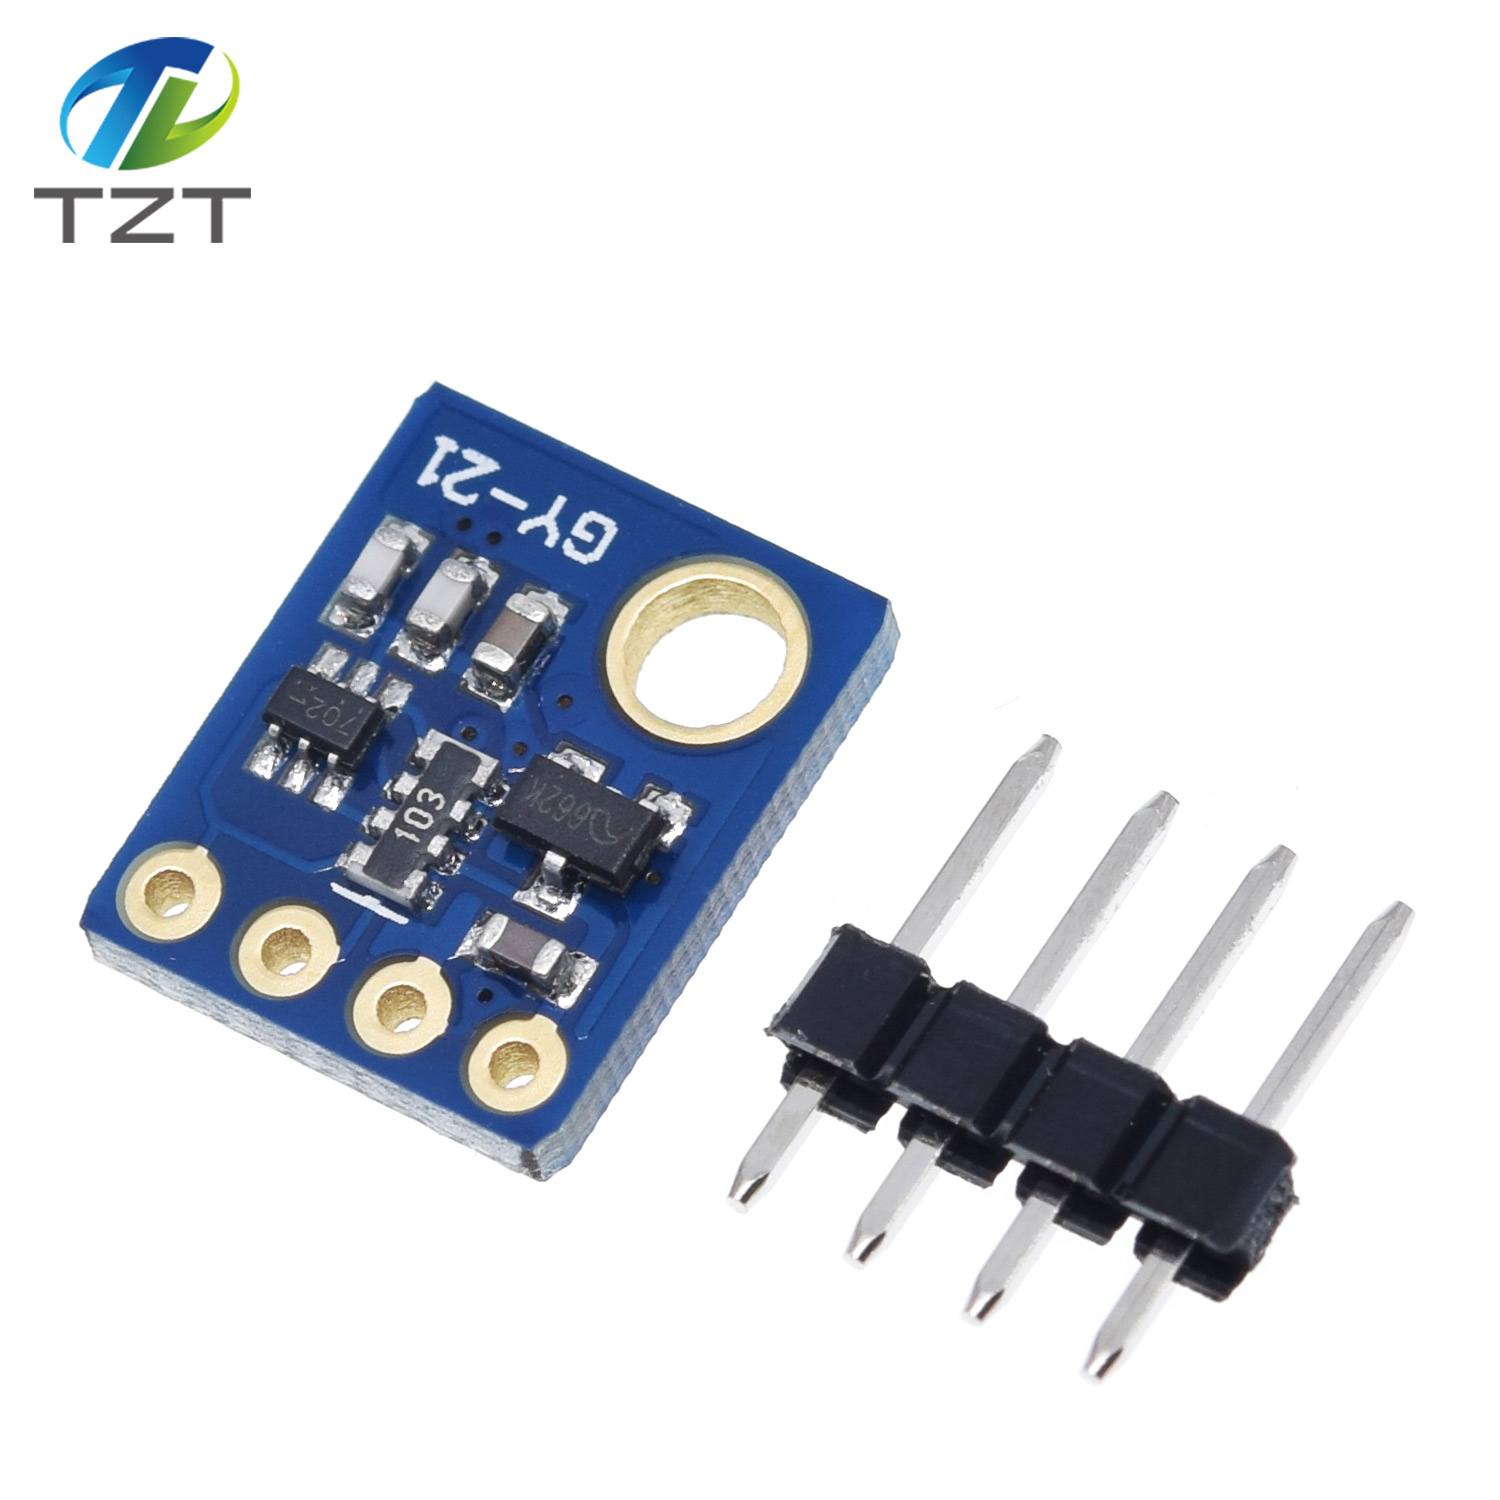 TZT Si7021 GY-21 Module Industrial High Precision Humidity Sensor I2C IIC Interface Module For Arduino Low Power CMOS IC Module